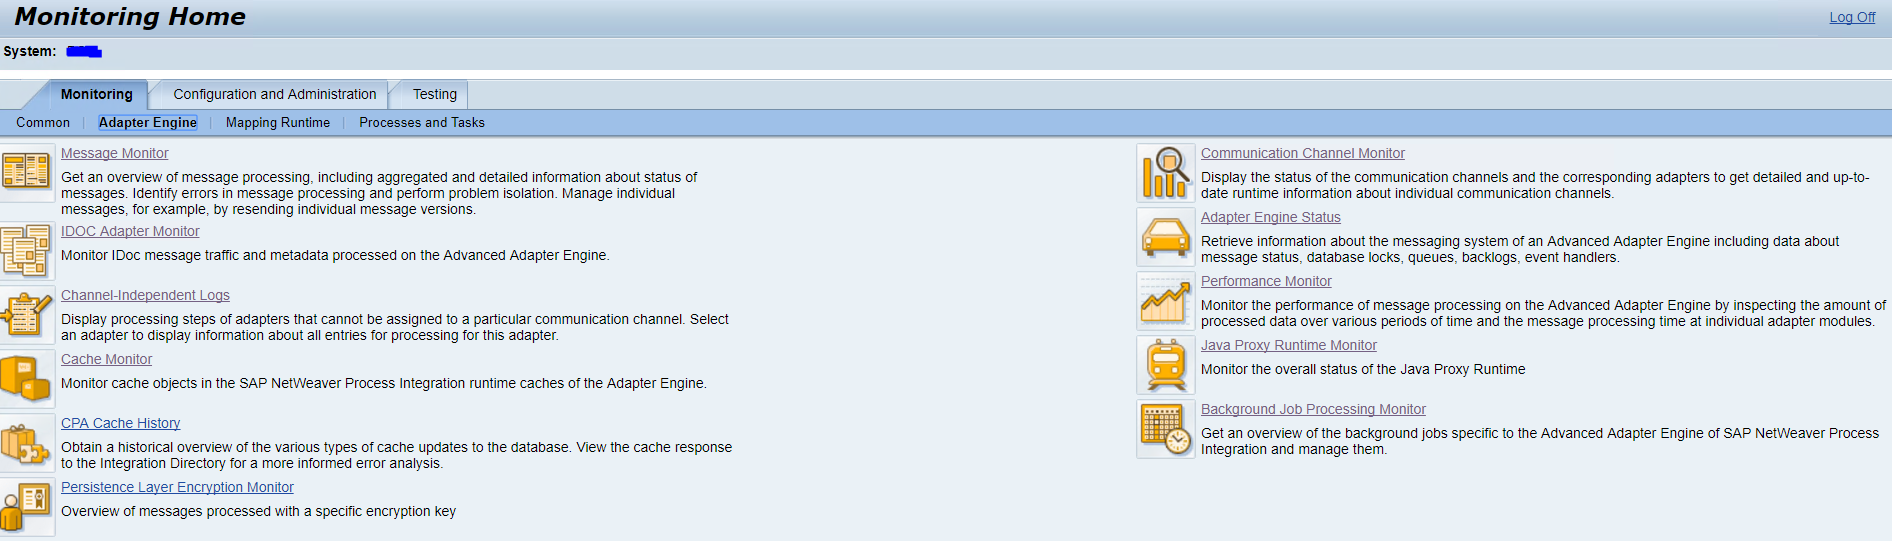 SAP Netweaver Administrator PI Monitoring Home Screen